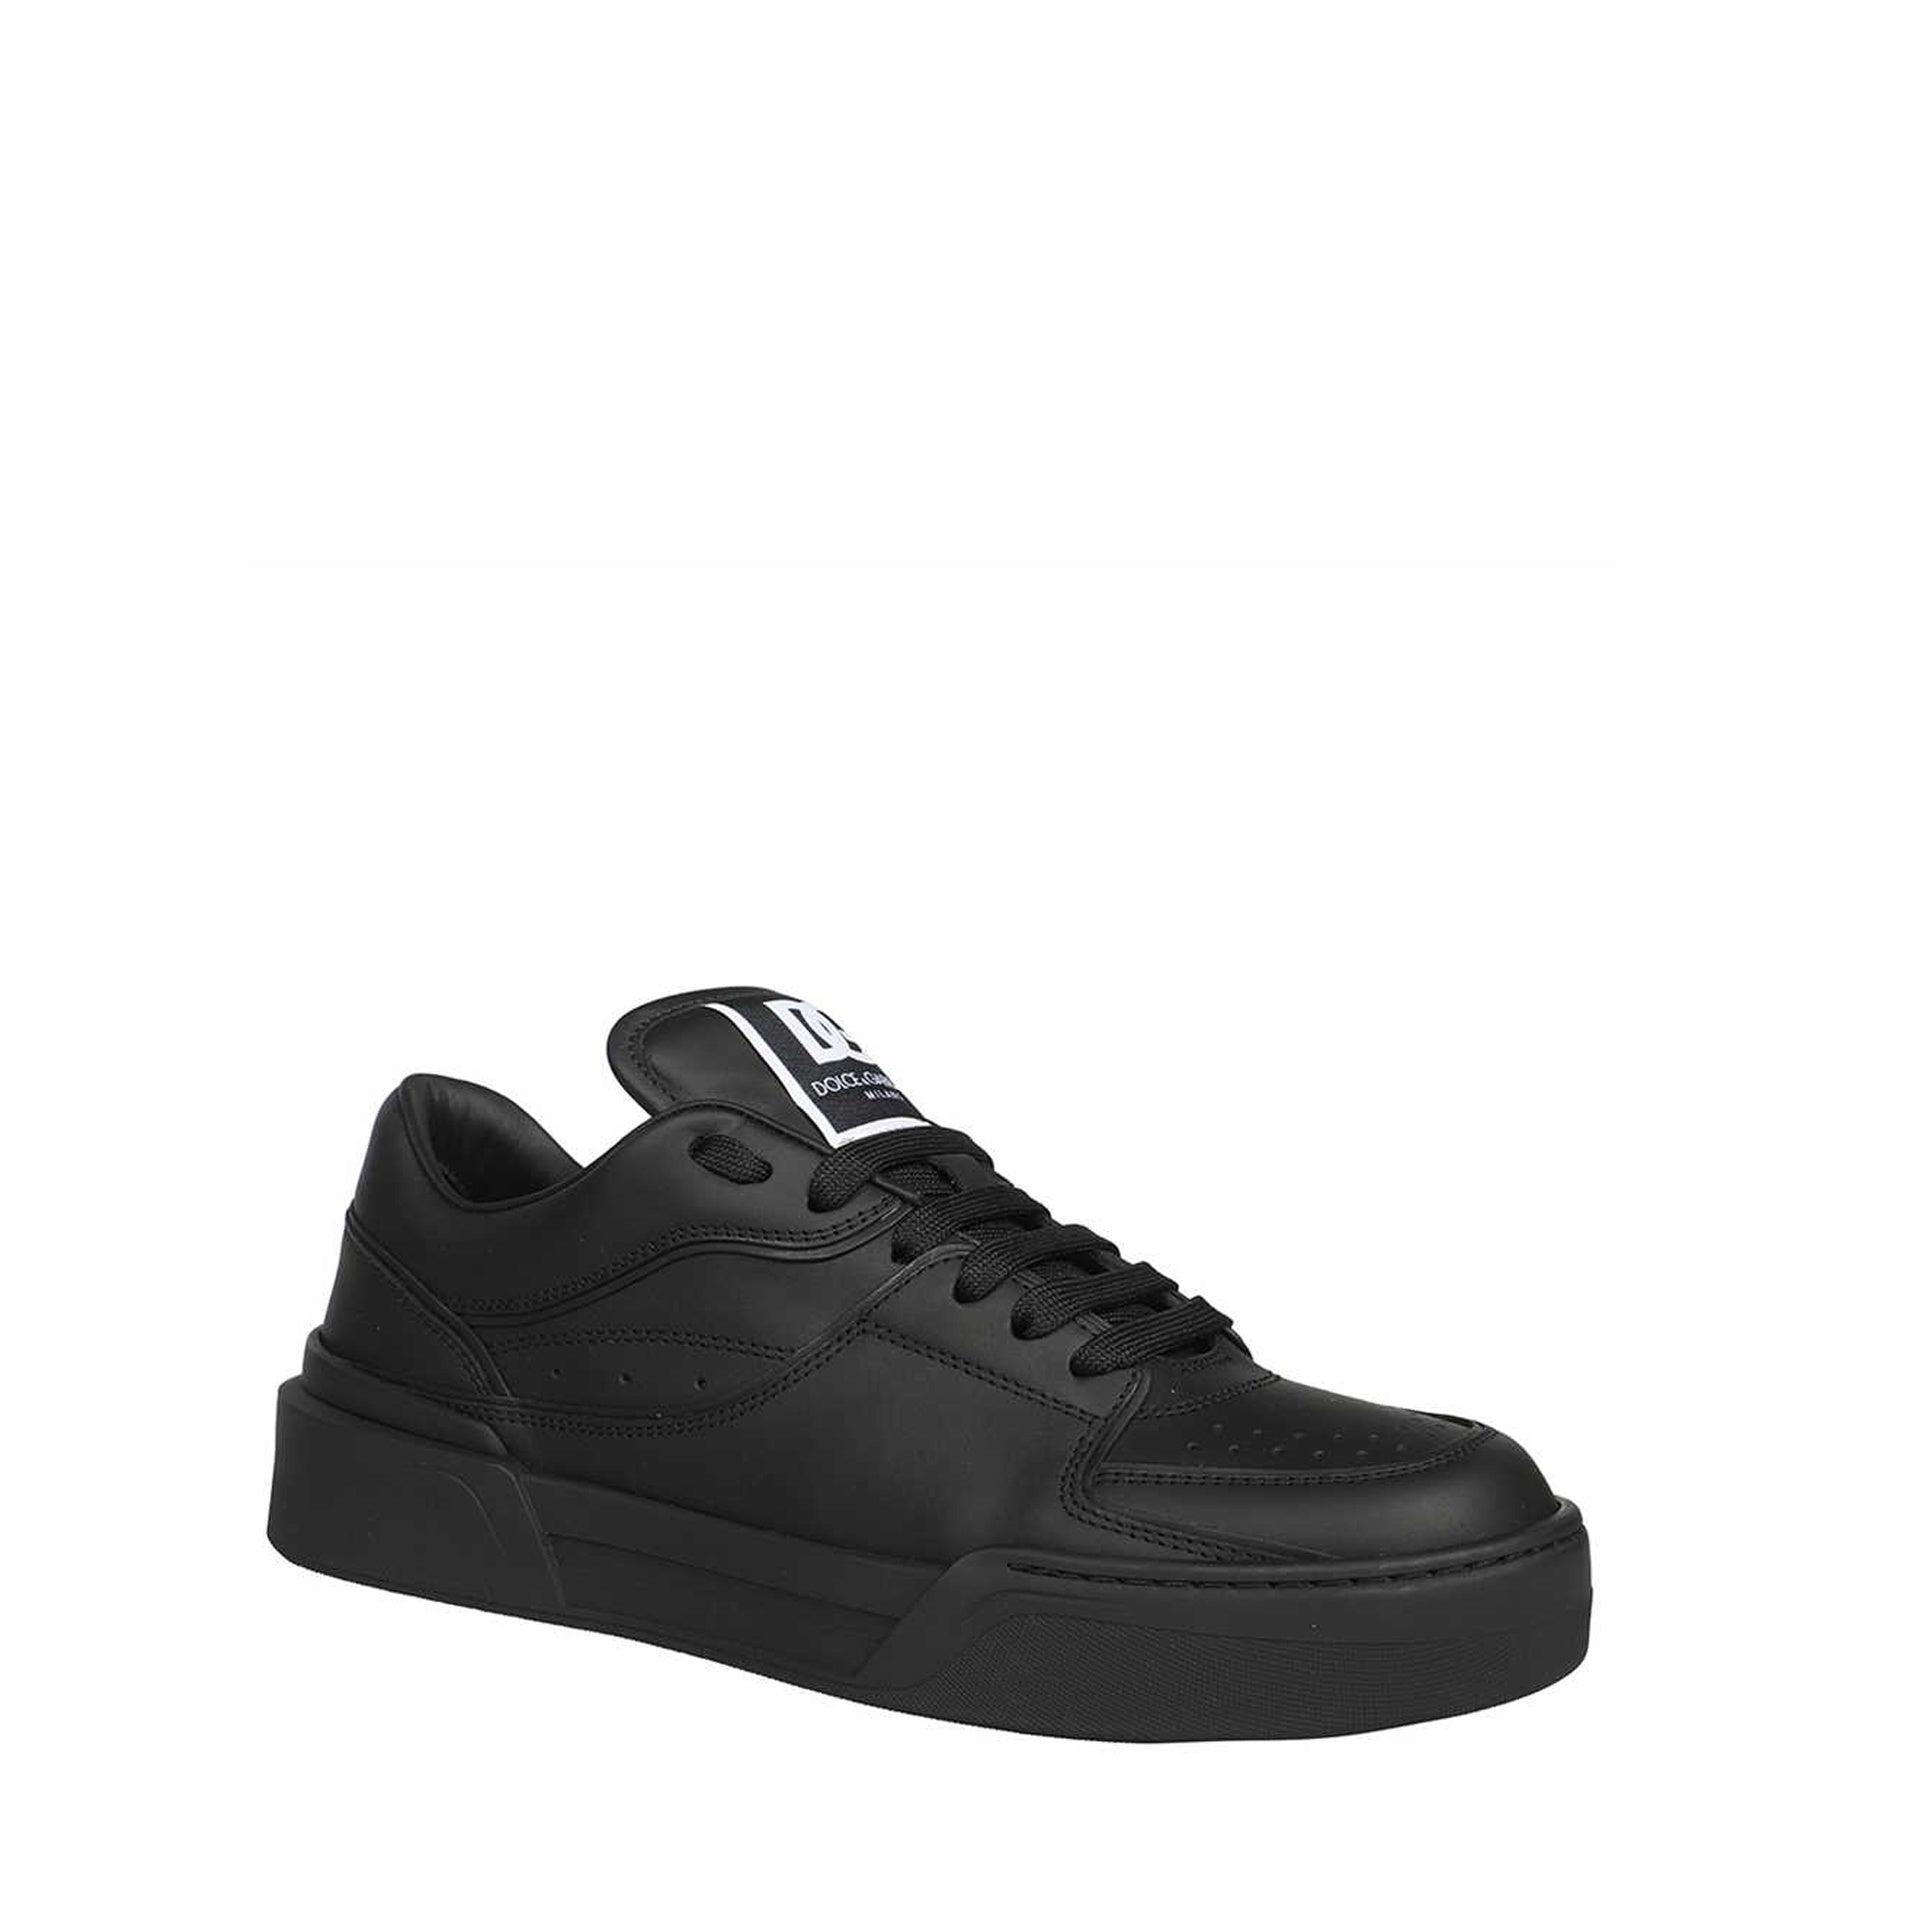 DOLCE___GABBANA_Dolce___Gabbana_Leather_Sneakers_CS2036_A1065_80999_Black_2.jpg